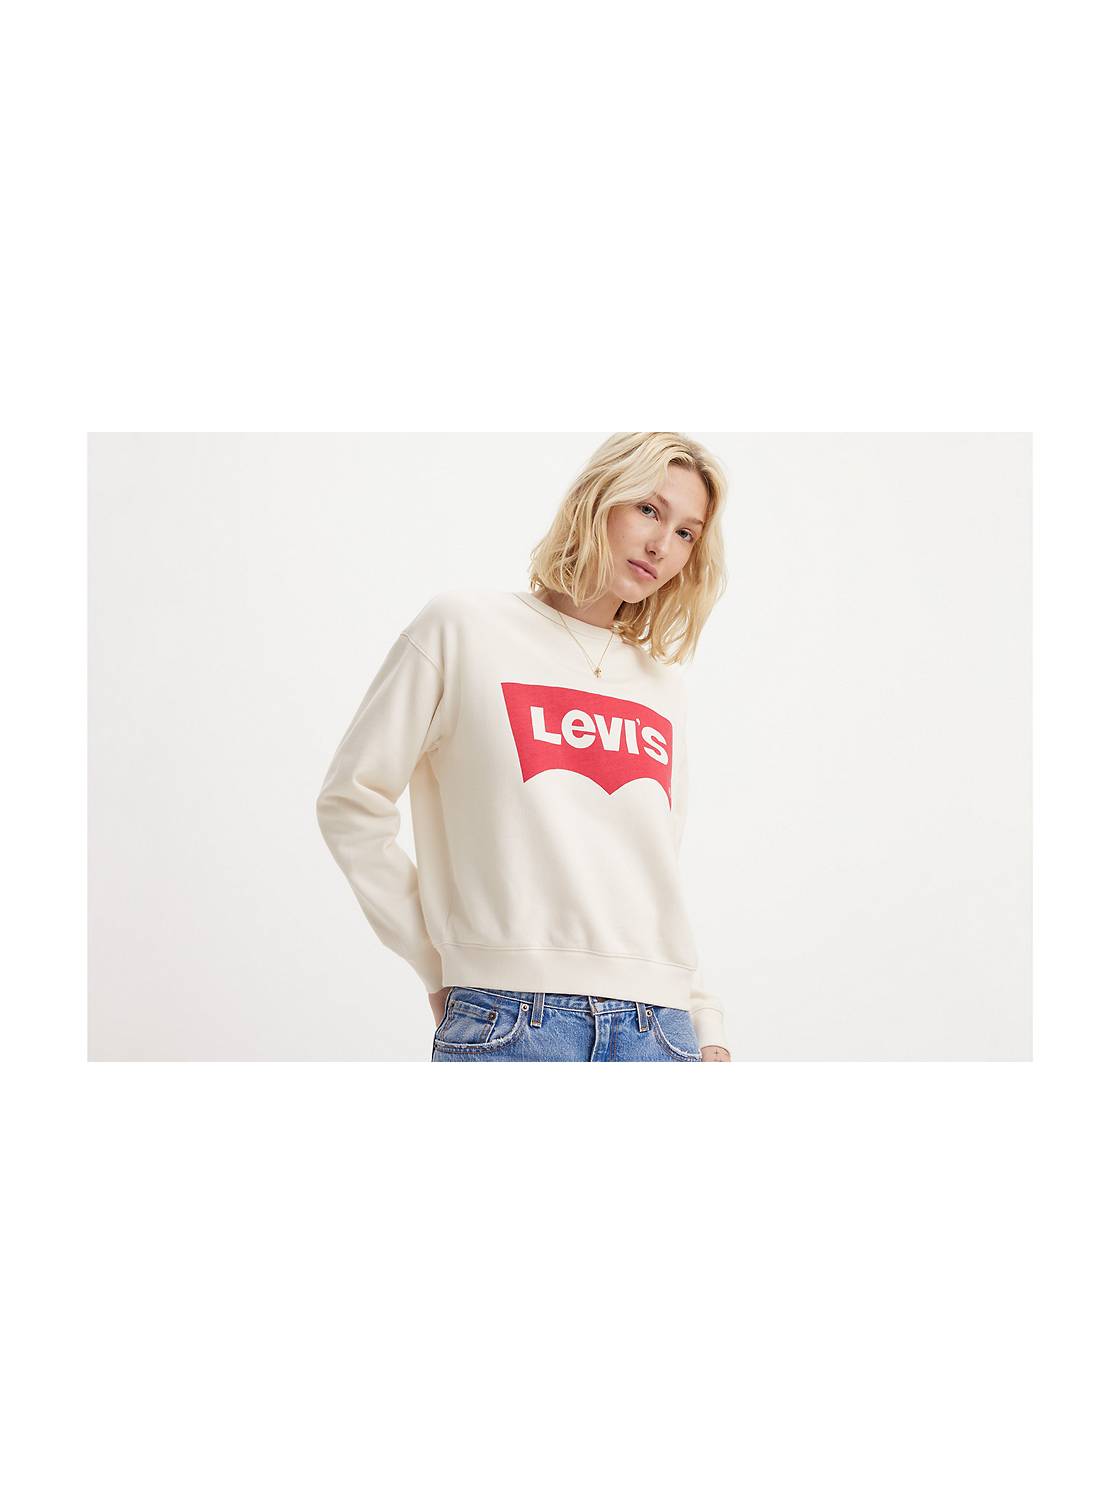 Sweaters & Sweatshirts, New White Soft Sweater